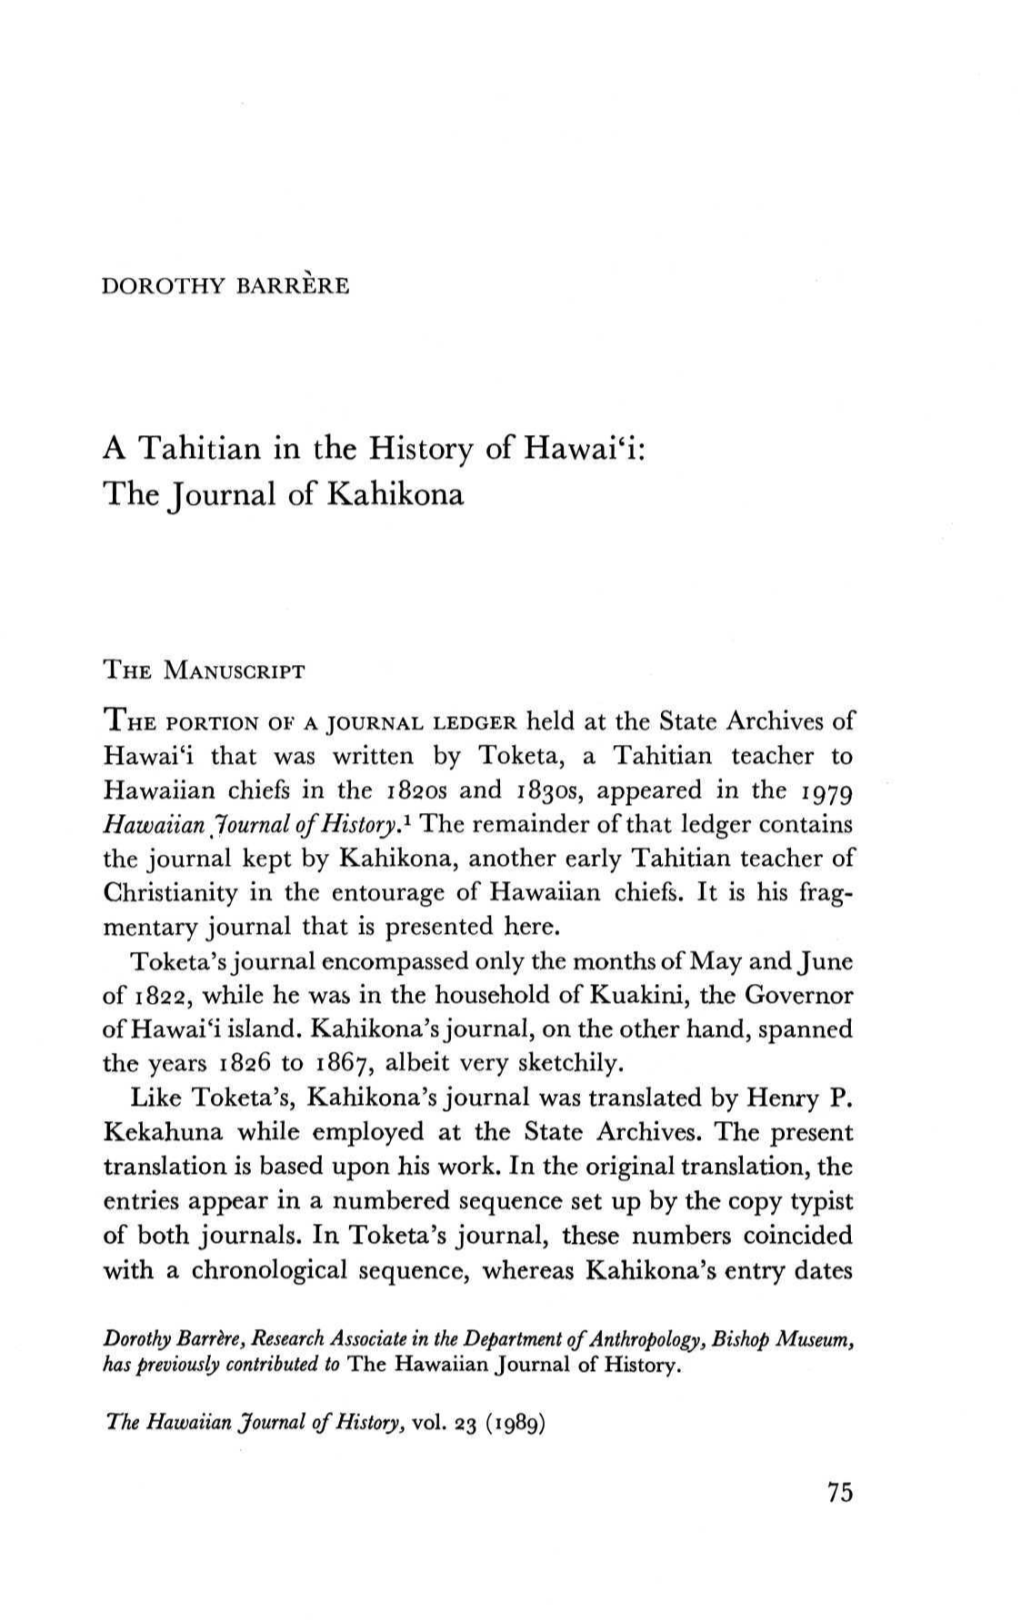 A Tahitian in the History of Hawai'i: the Journal of Kahikona